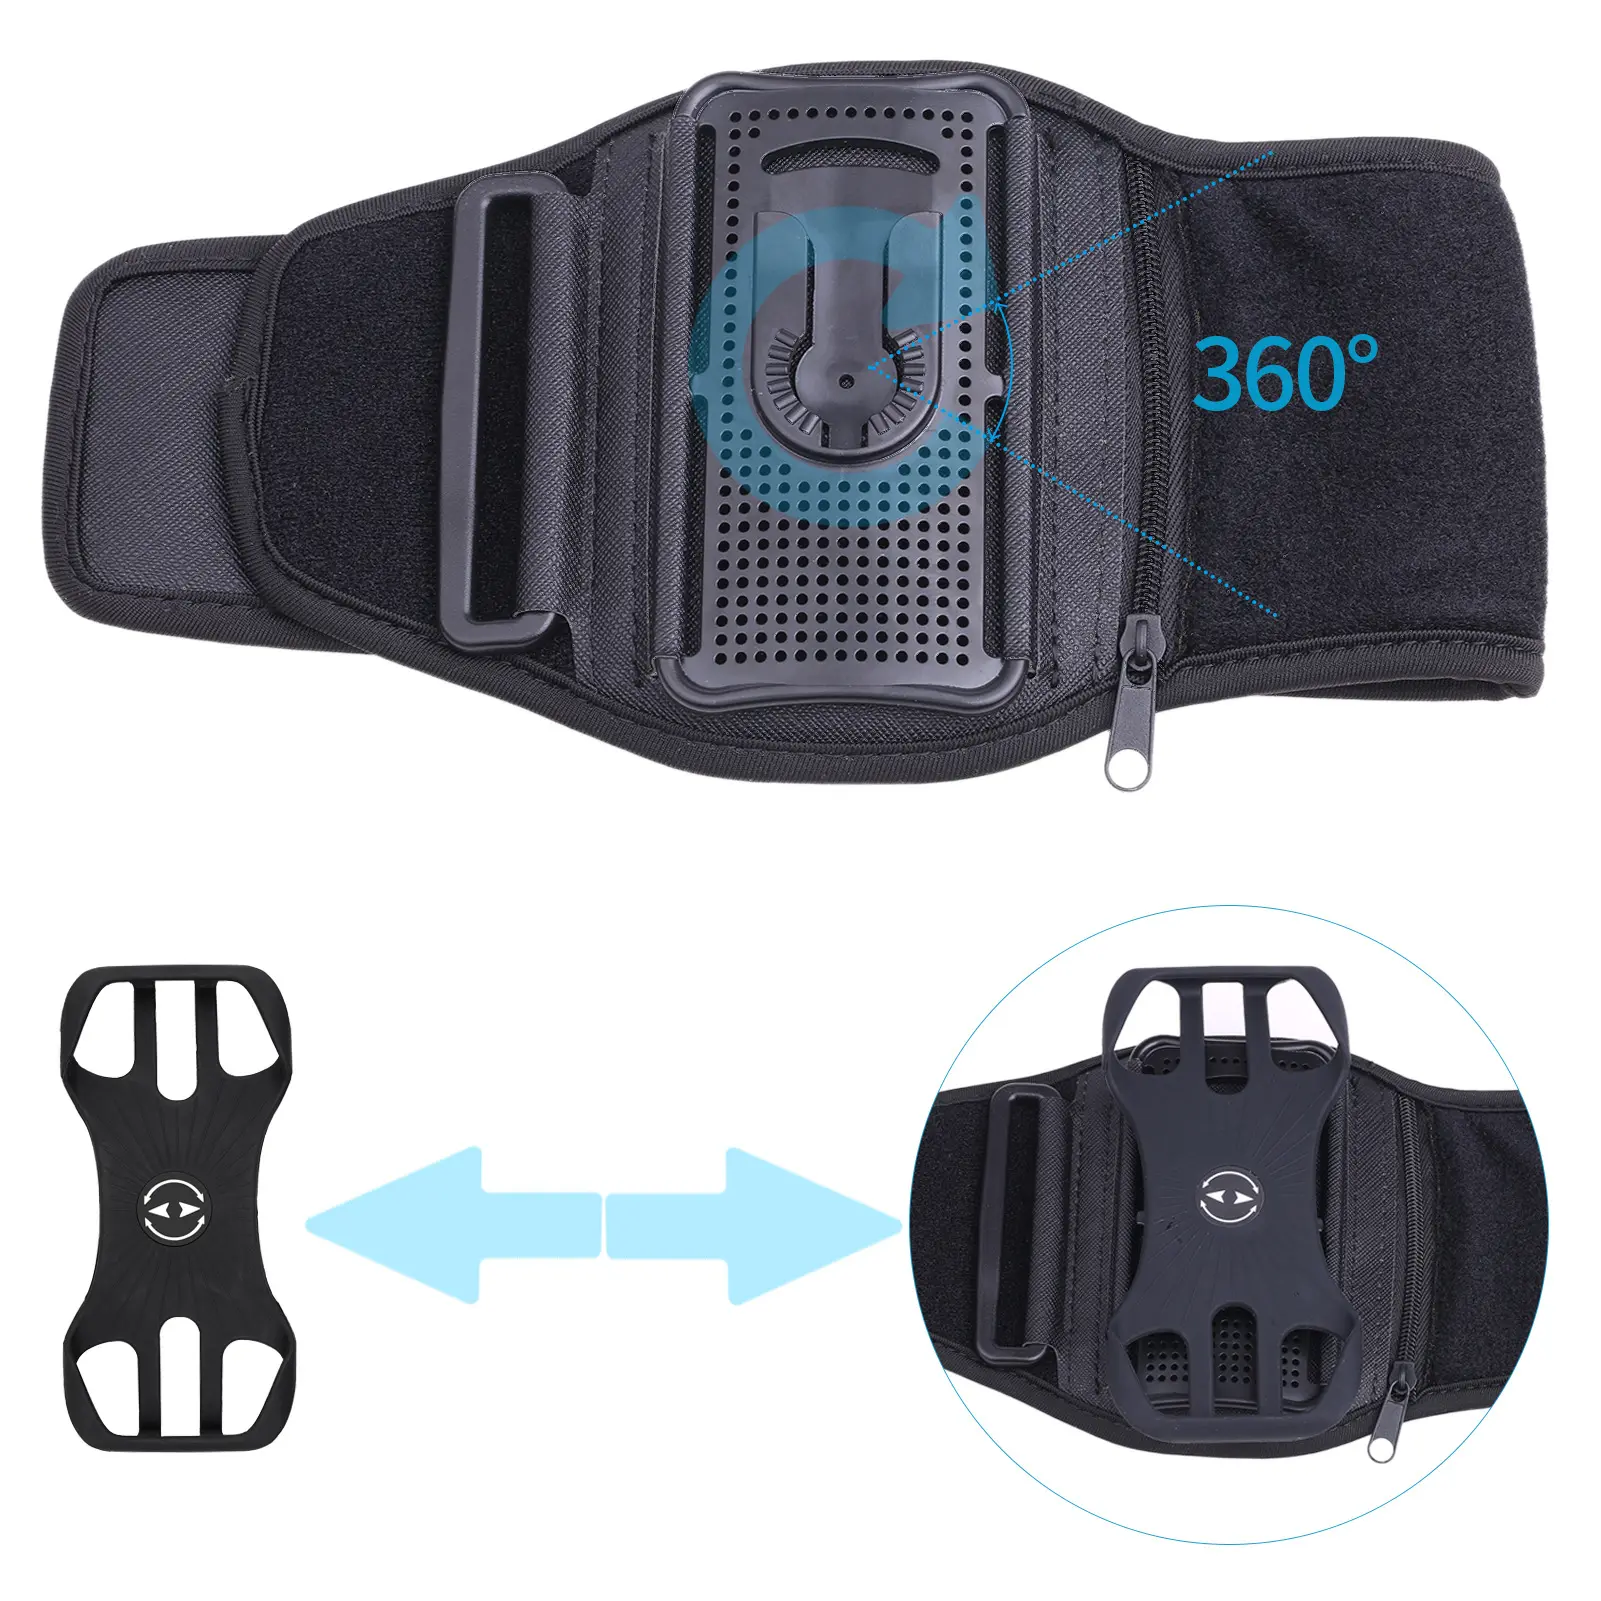 High quality Armband Cell Phone Holder 360 Rotation Neoprene Sports Armband Wristband With Zipper Pocket